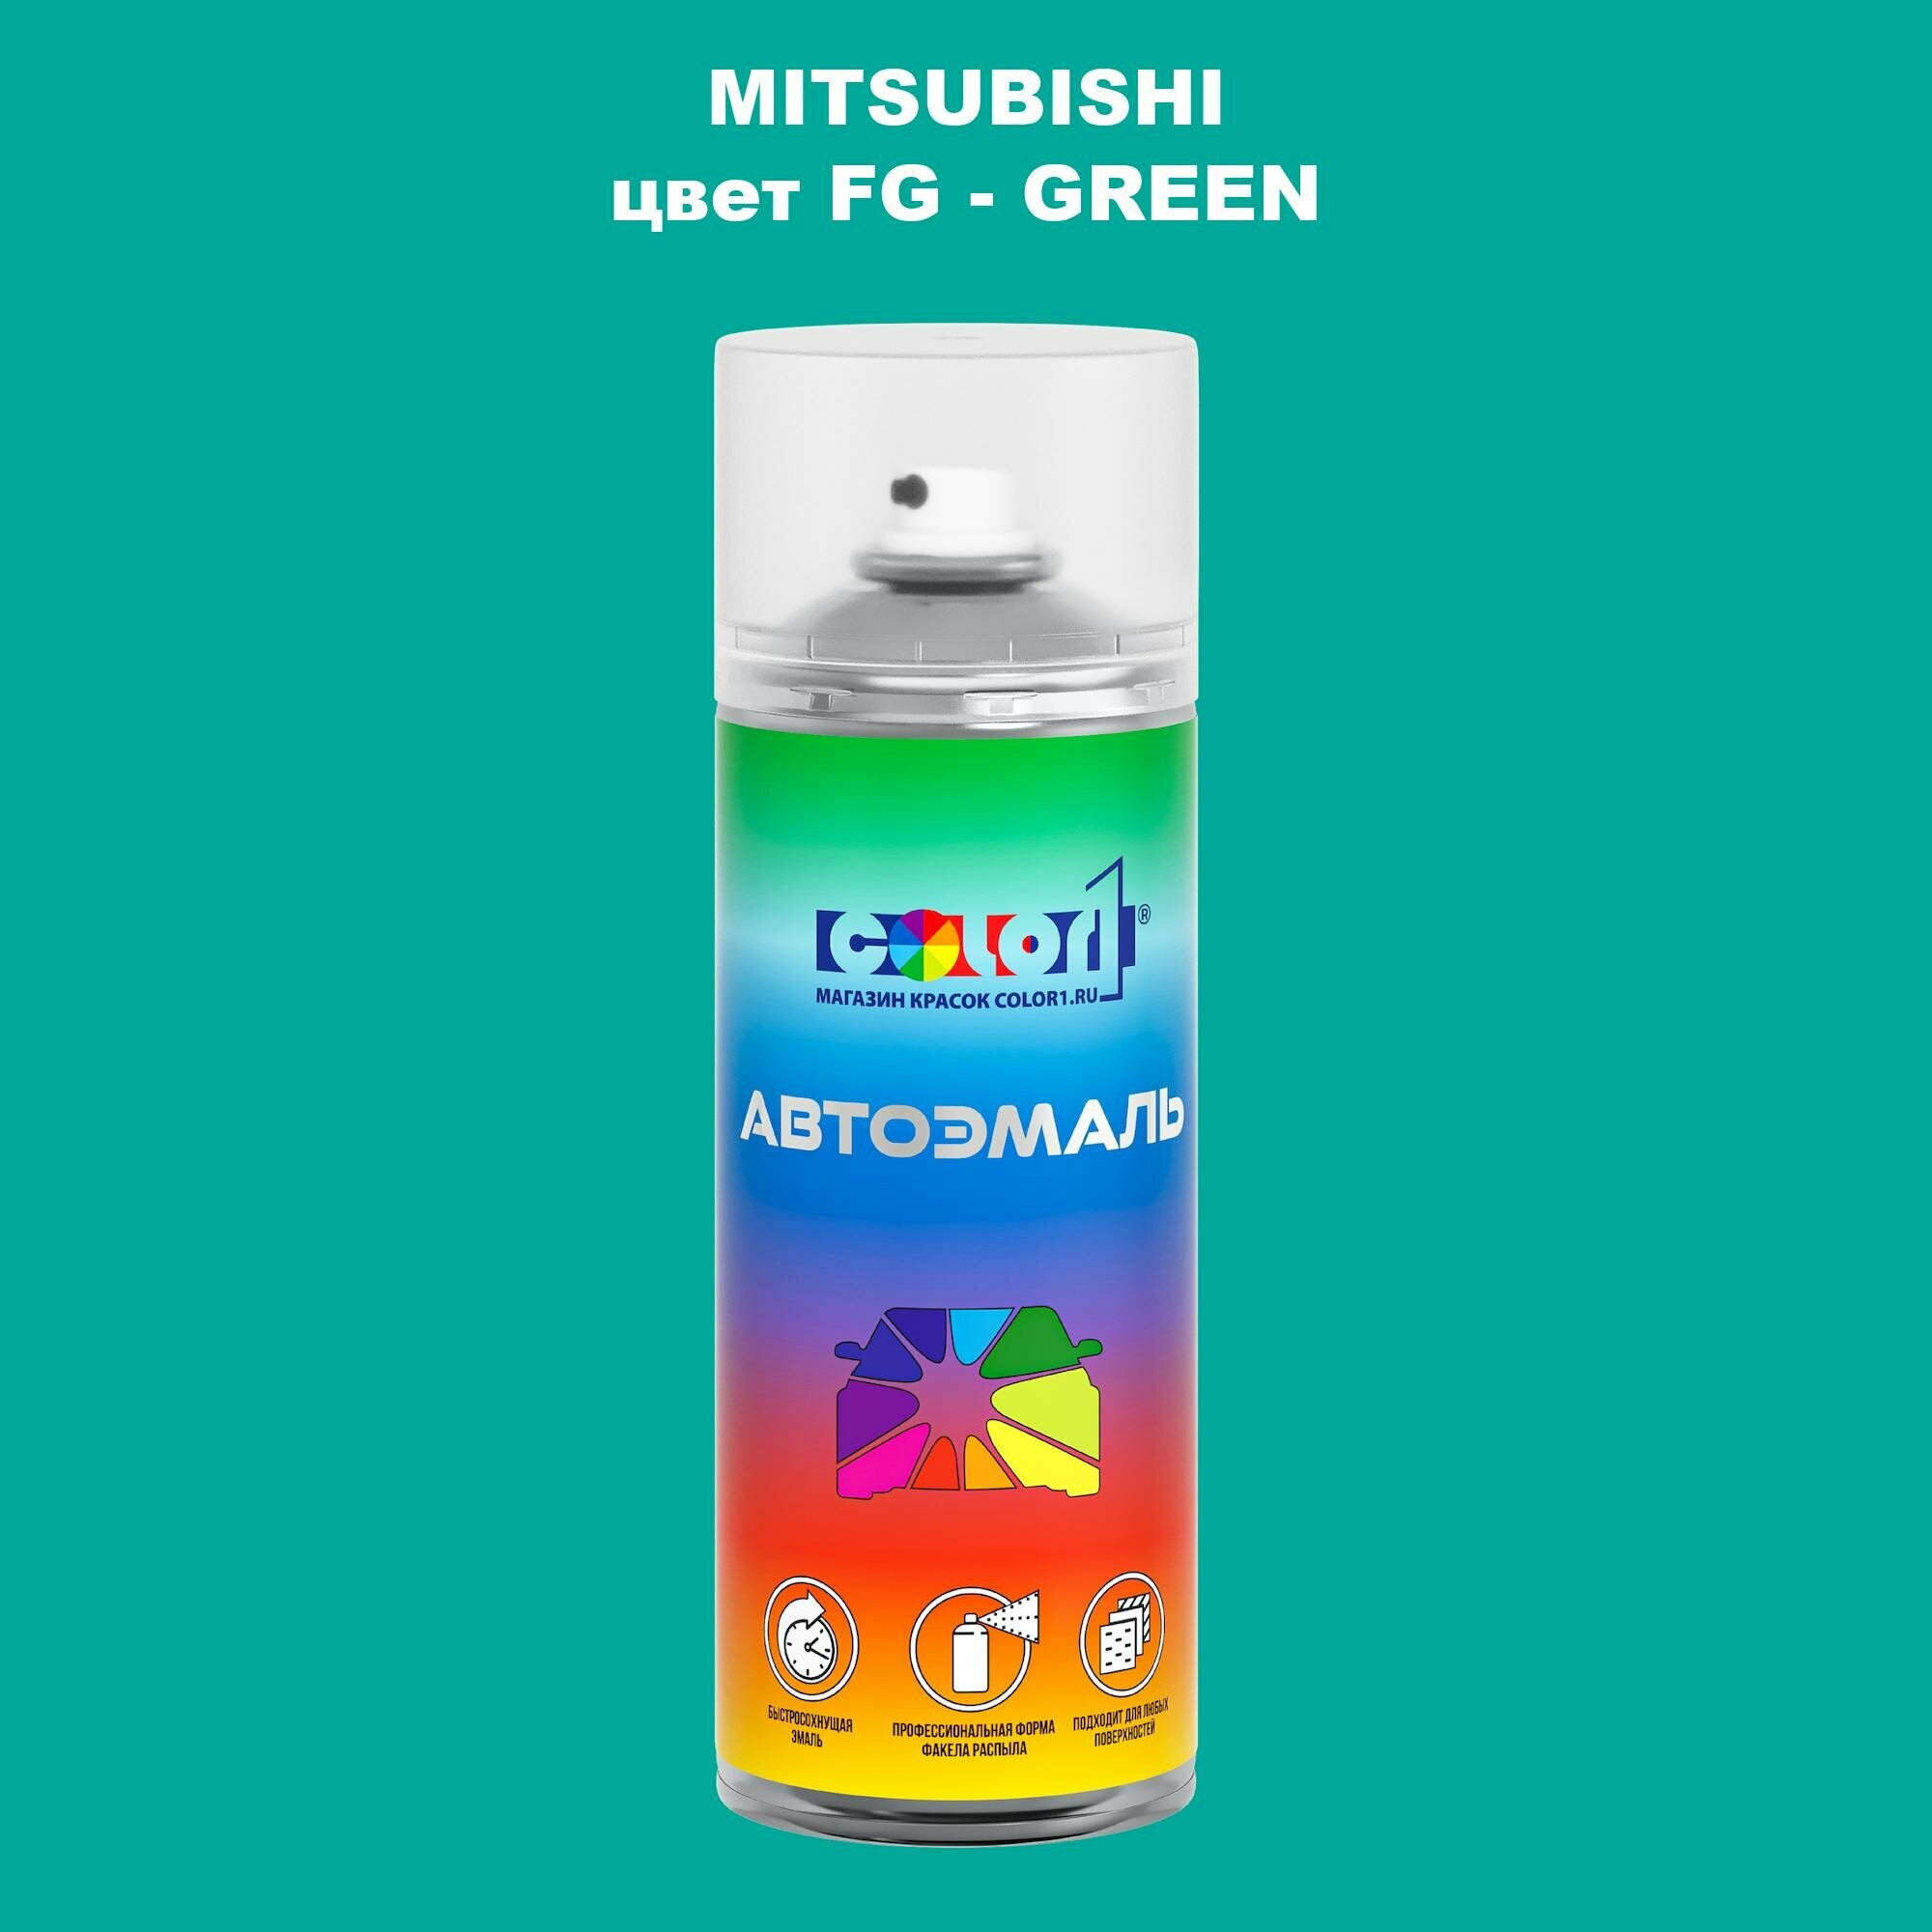 Аэрозольная краска COLOR1 для MITSUBISHI, цвет FG - GREEN